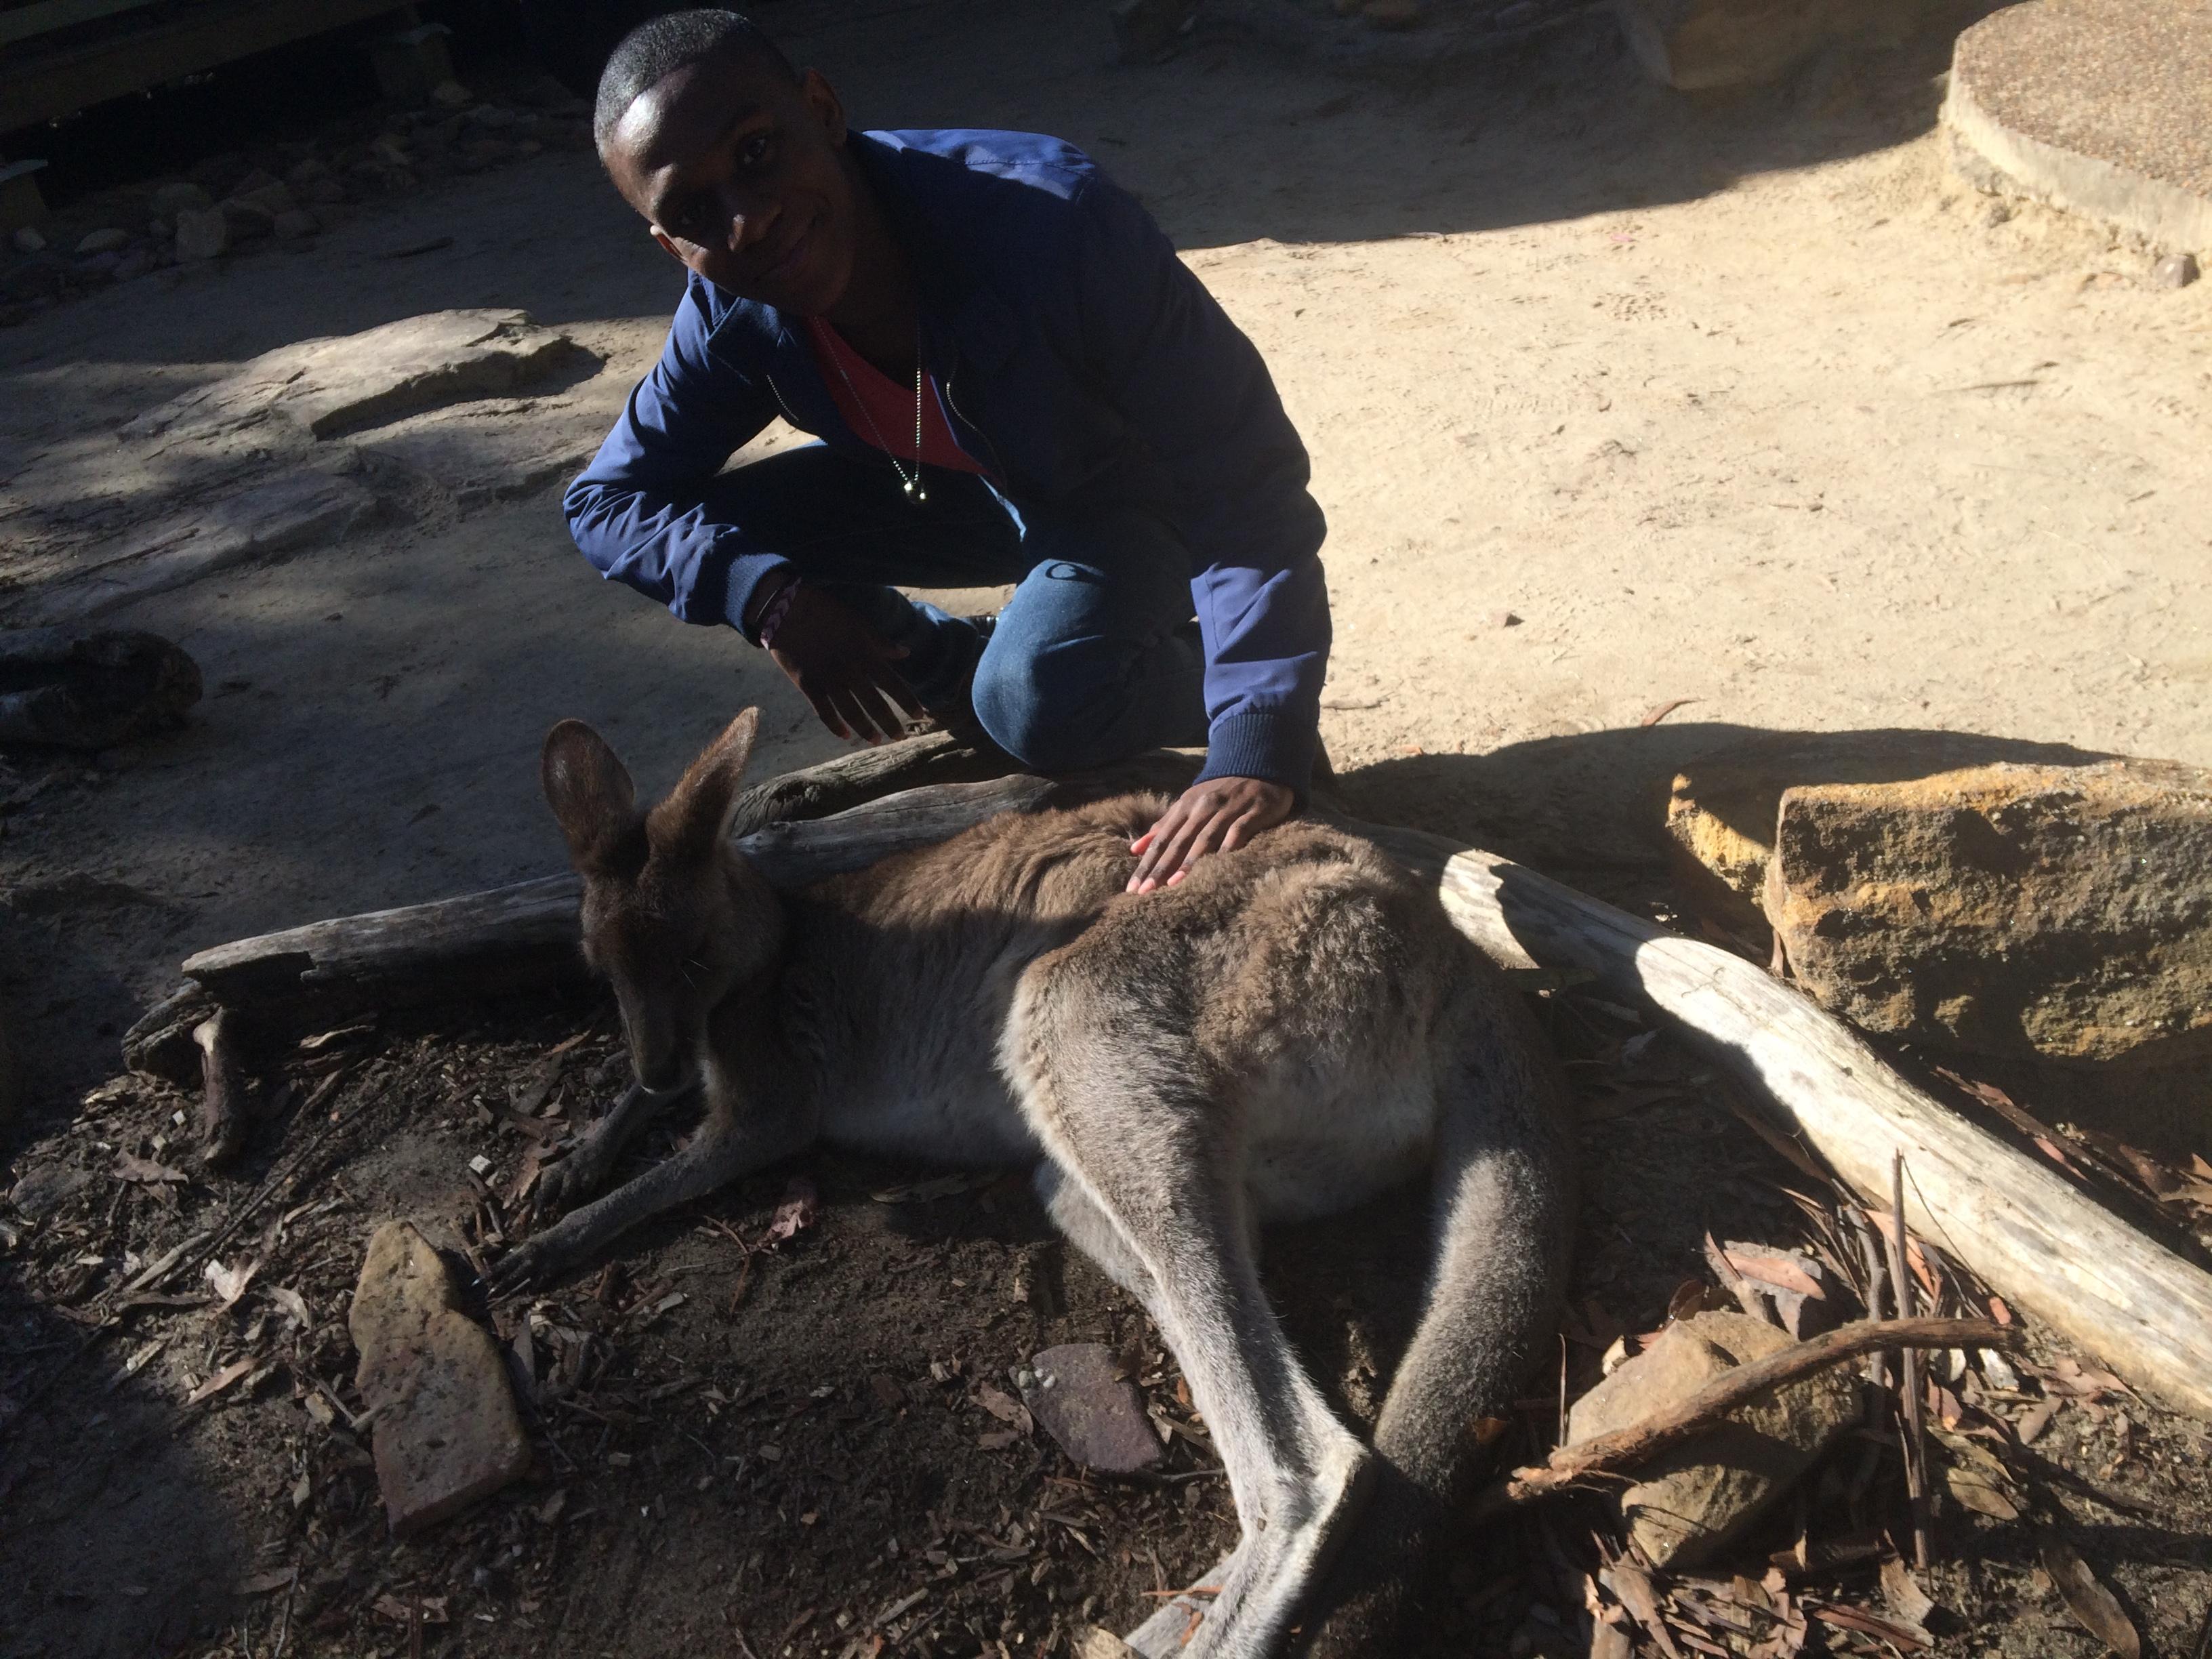 Sholand with a Kangaroo